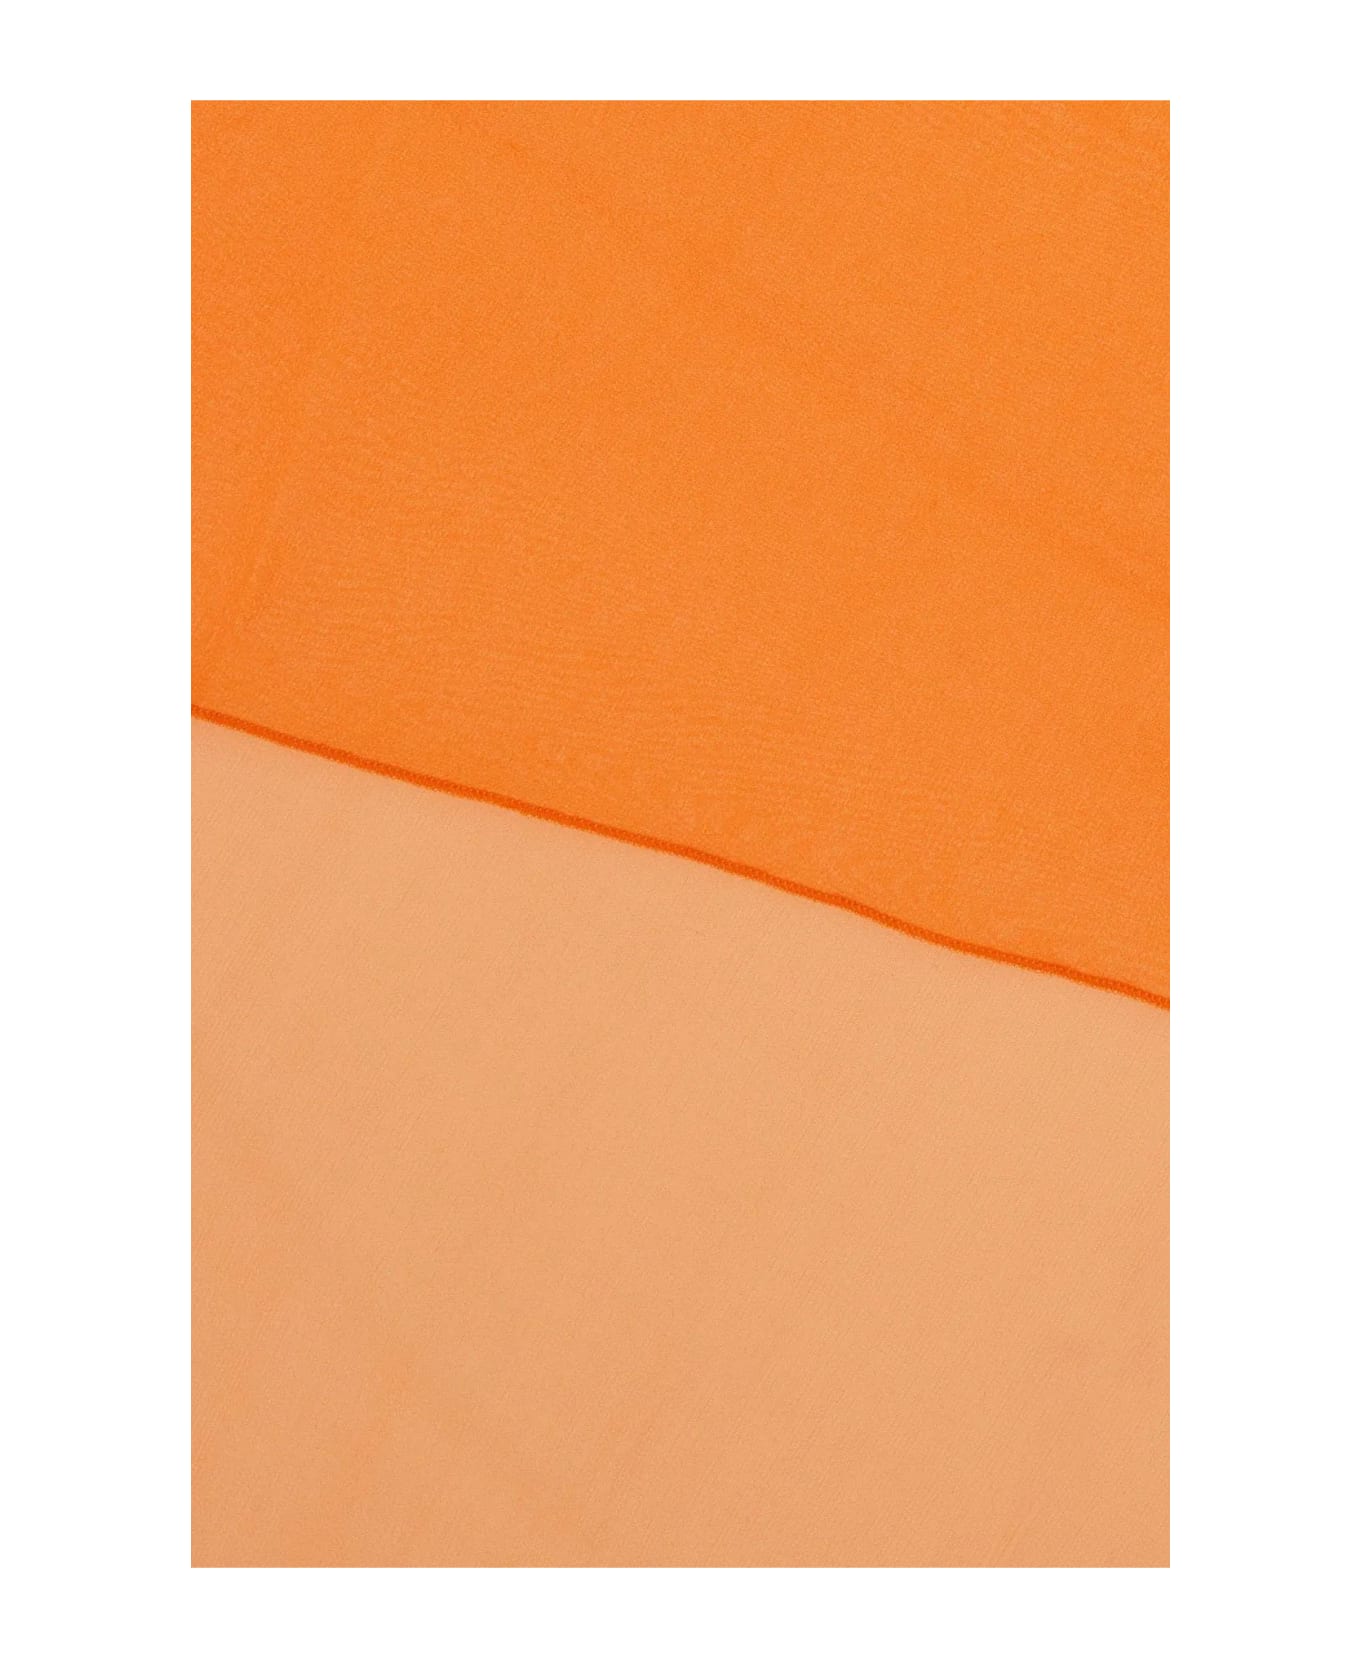 Alberta Ferretti Orange Silk Scarf - Orange